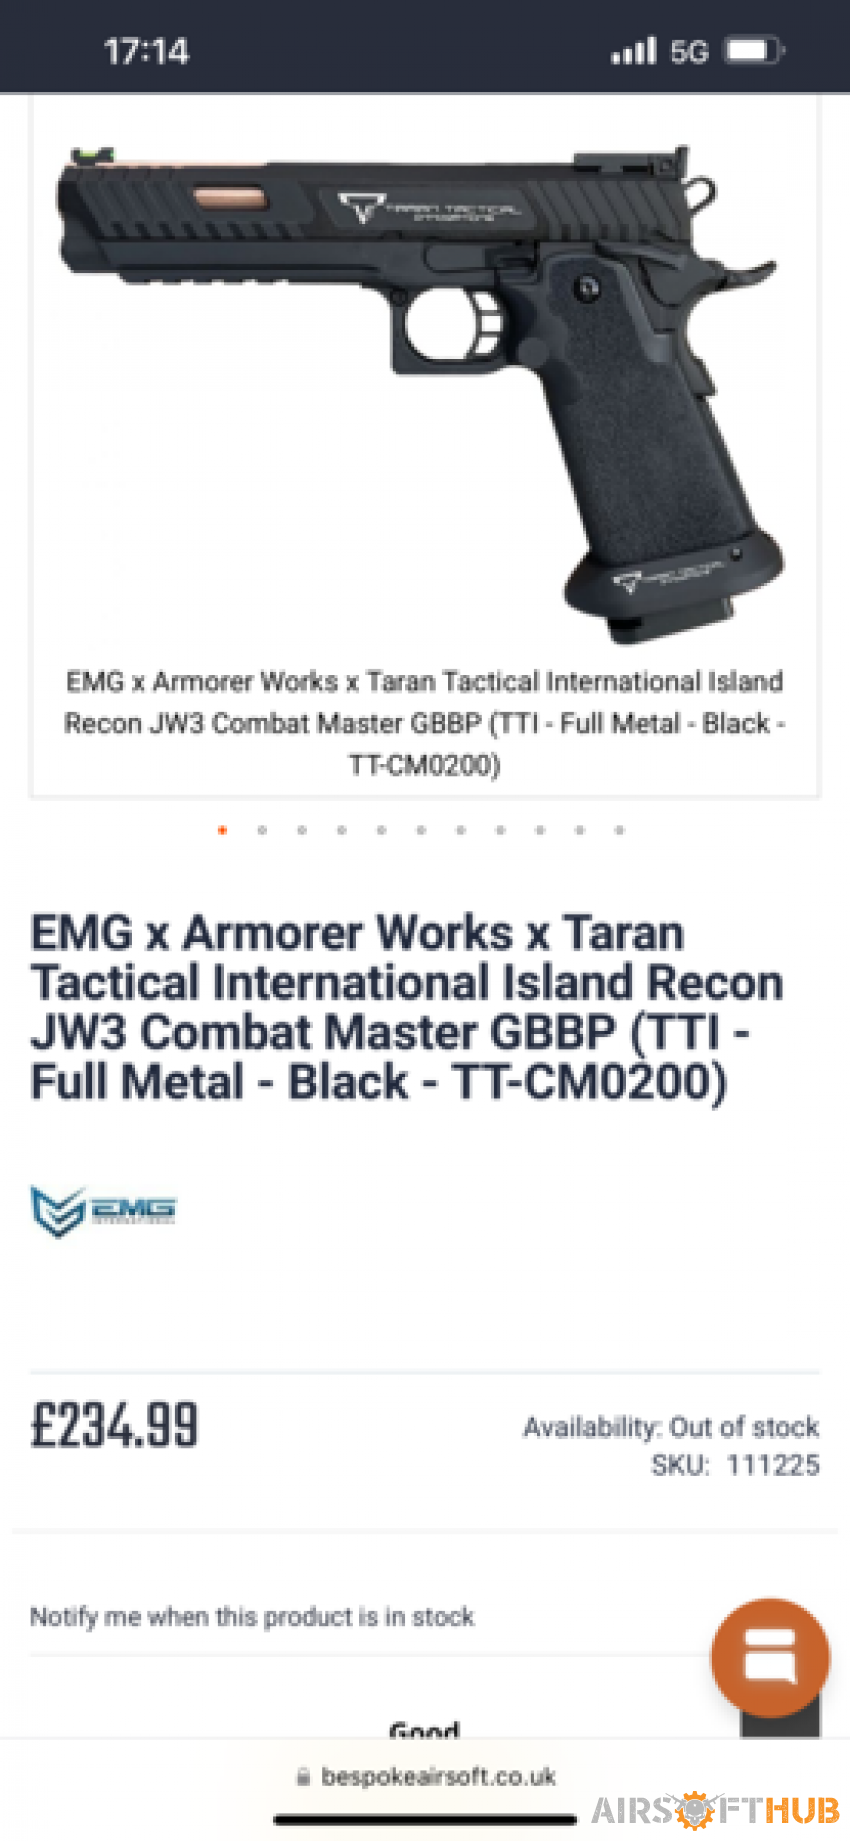 EMG x Armorer Works pistol JW - Used airsoft equipment